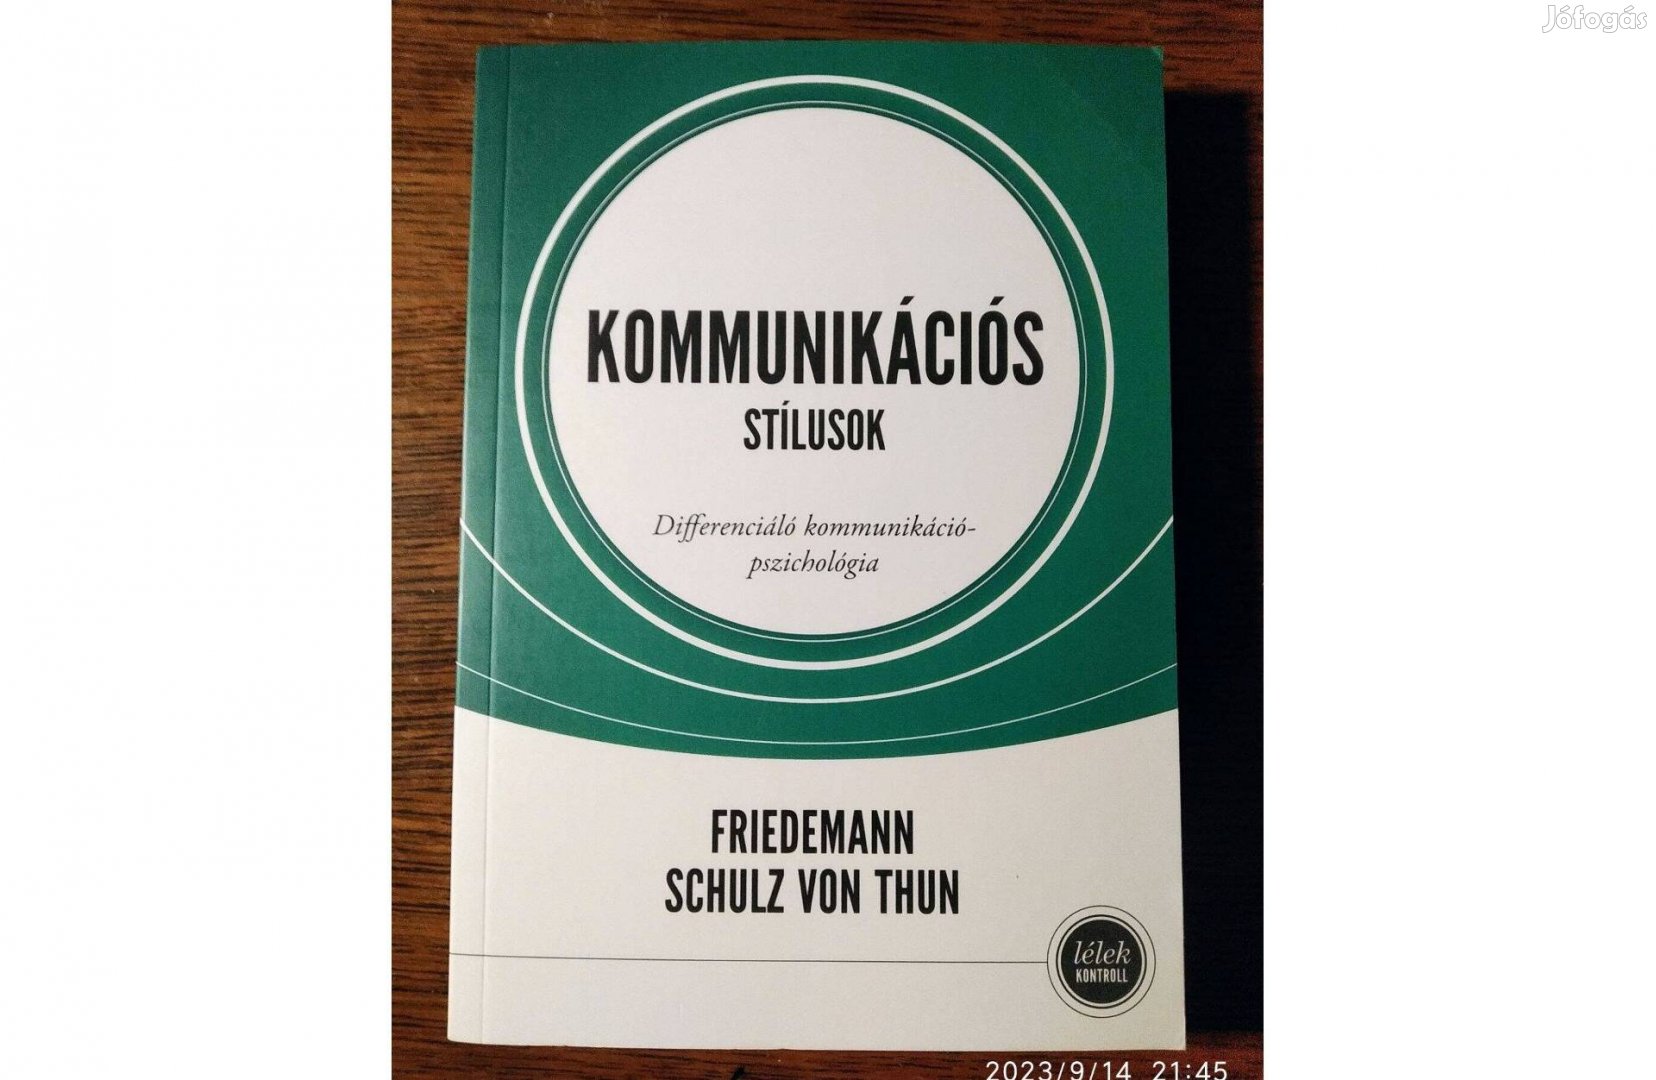 Kommunikációs stílusok Friedemann Schulz von Thun Háttér Kiadó